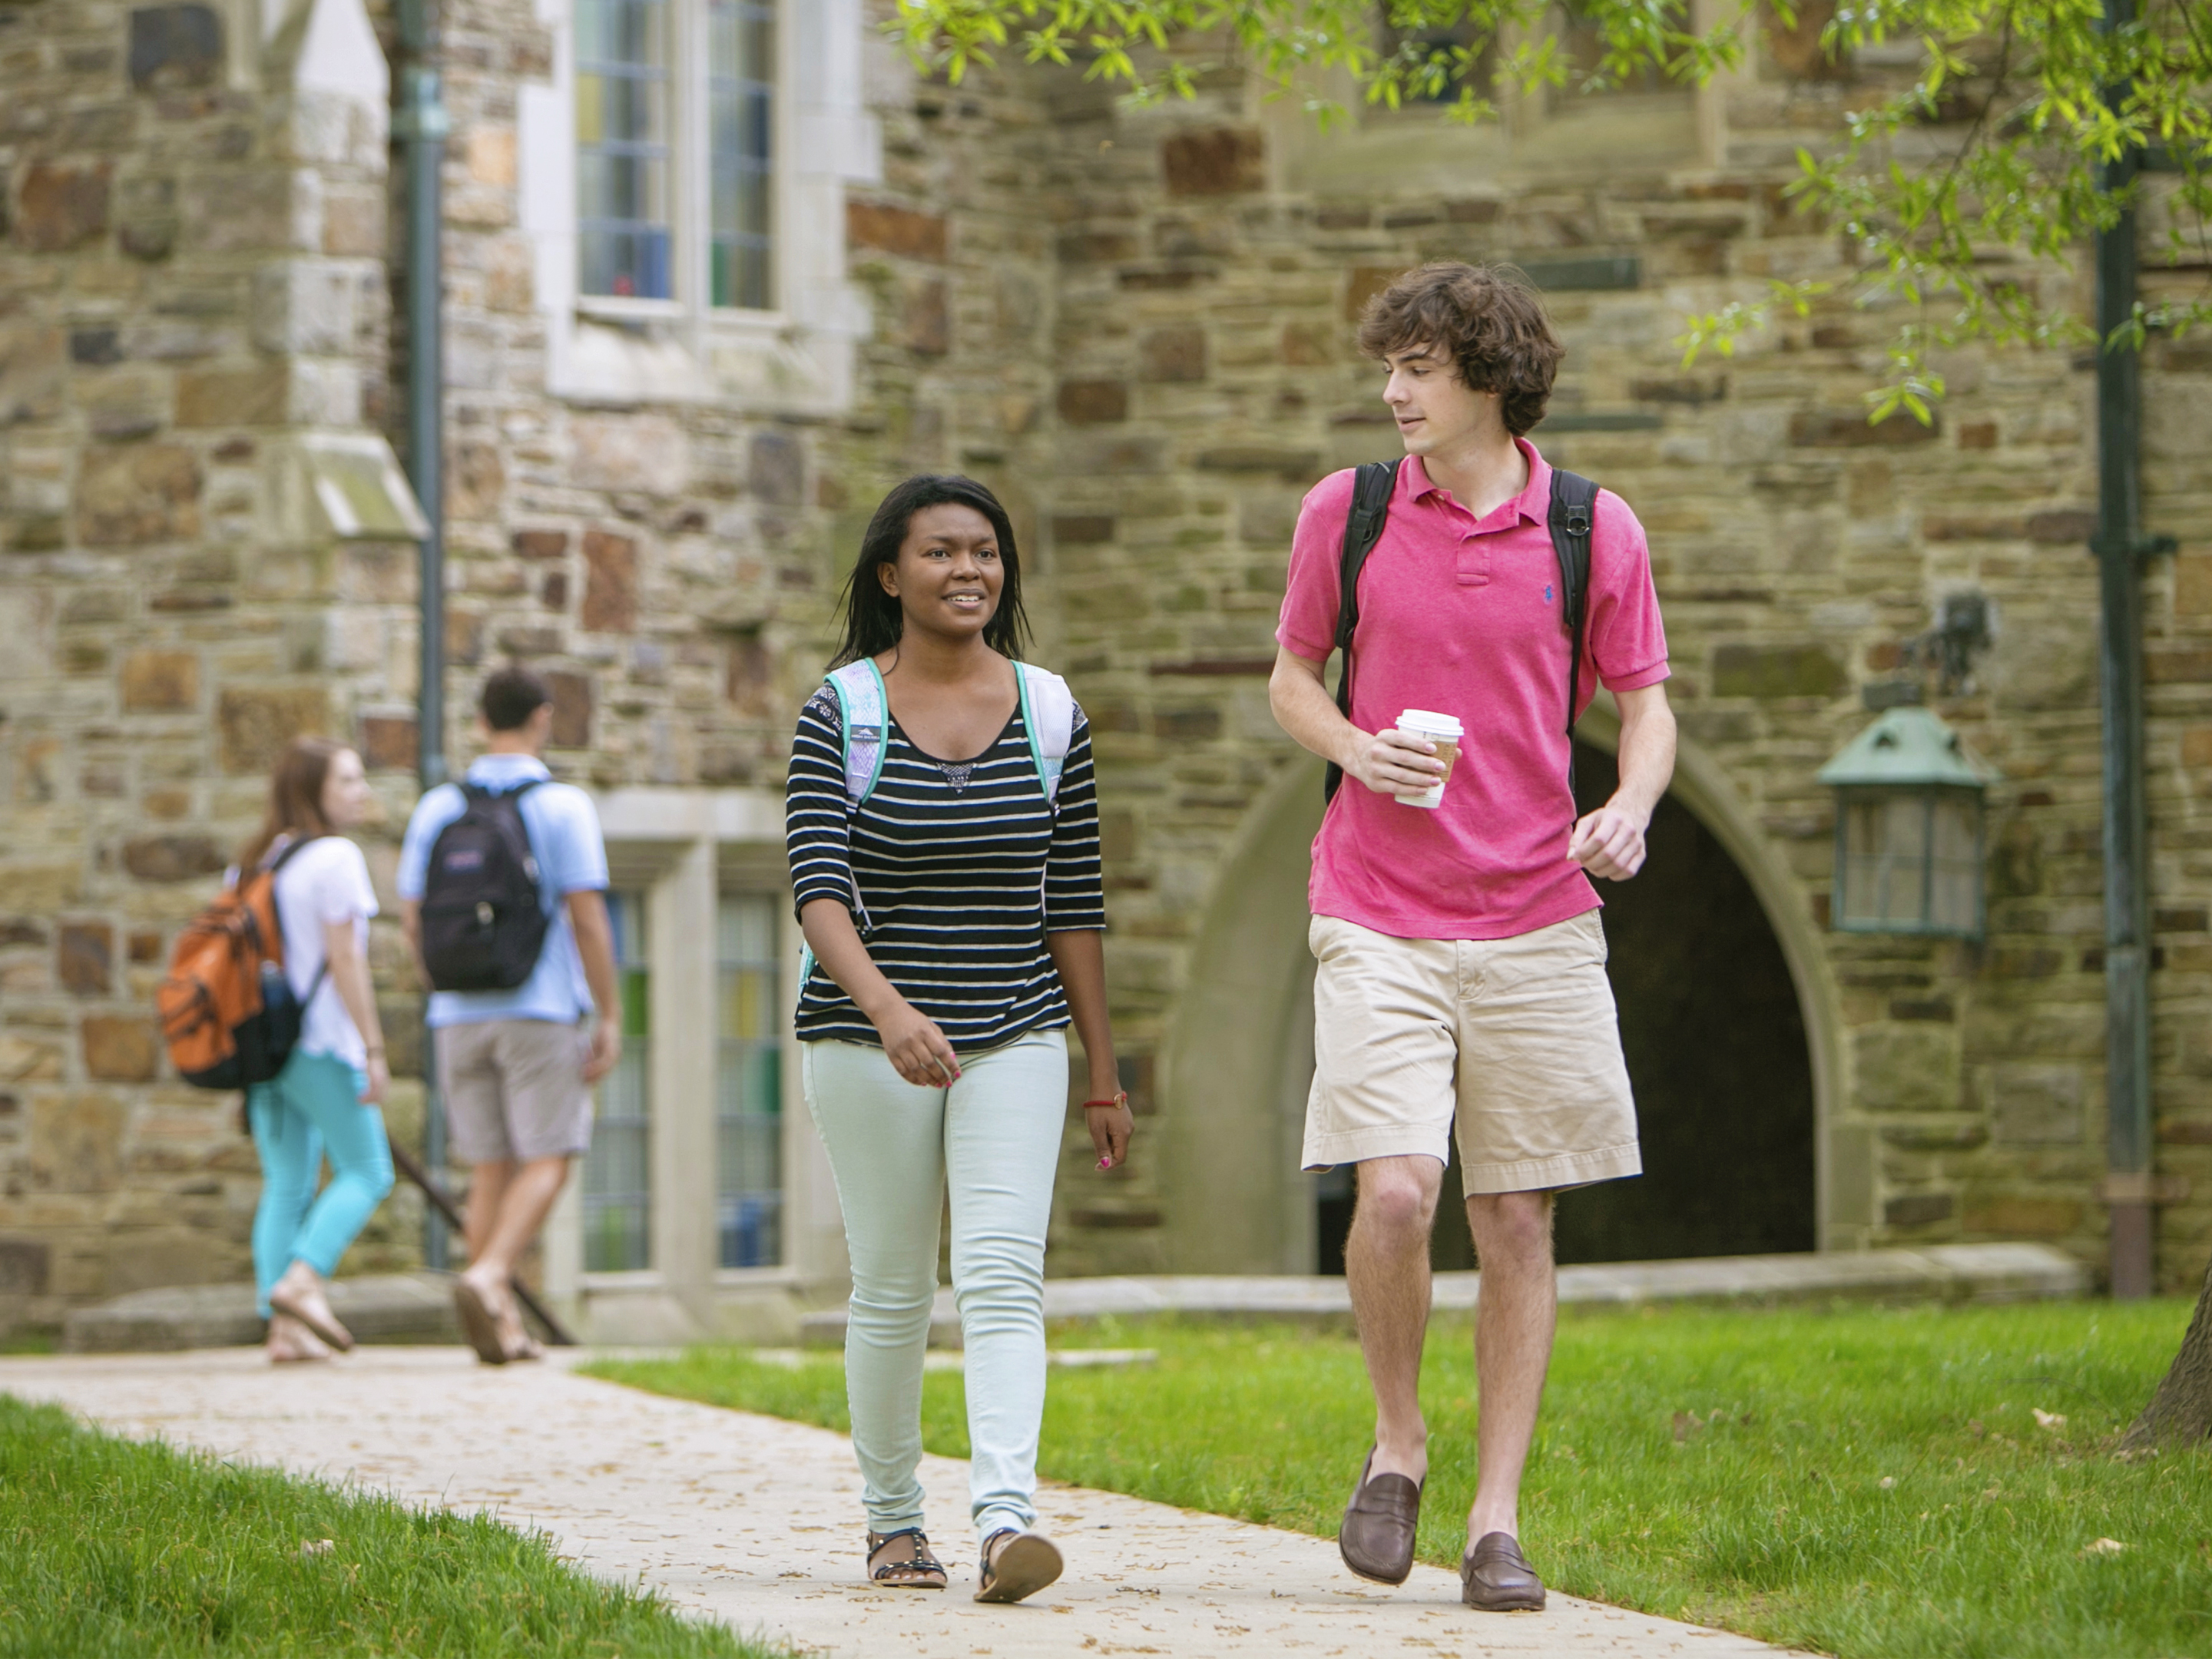 Students walking and talking on a sidewalk